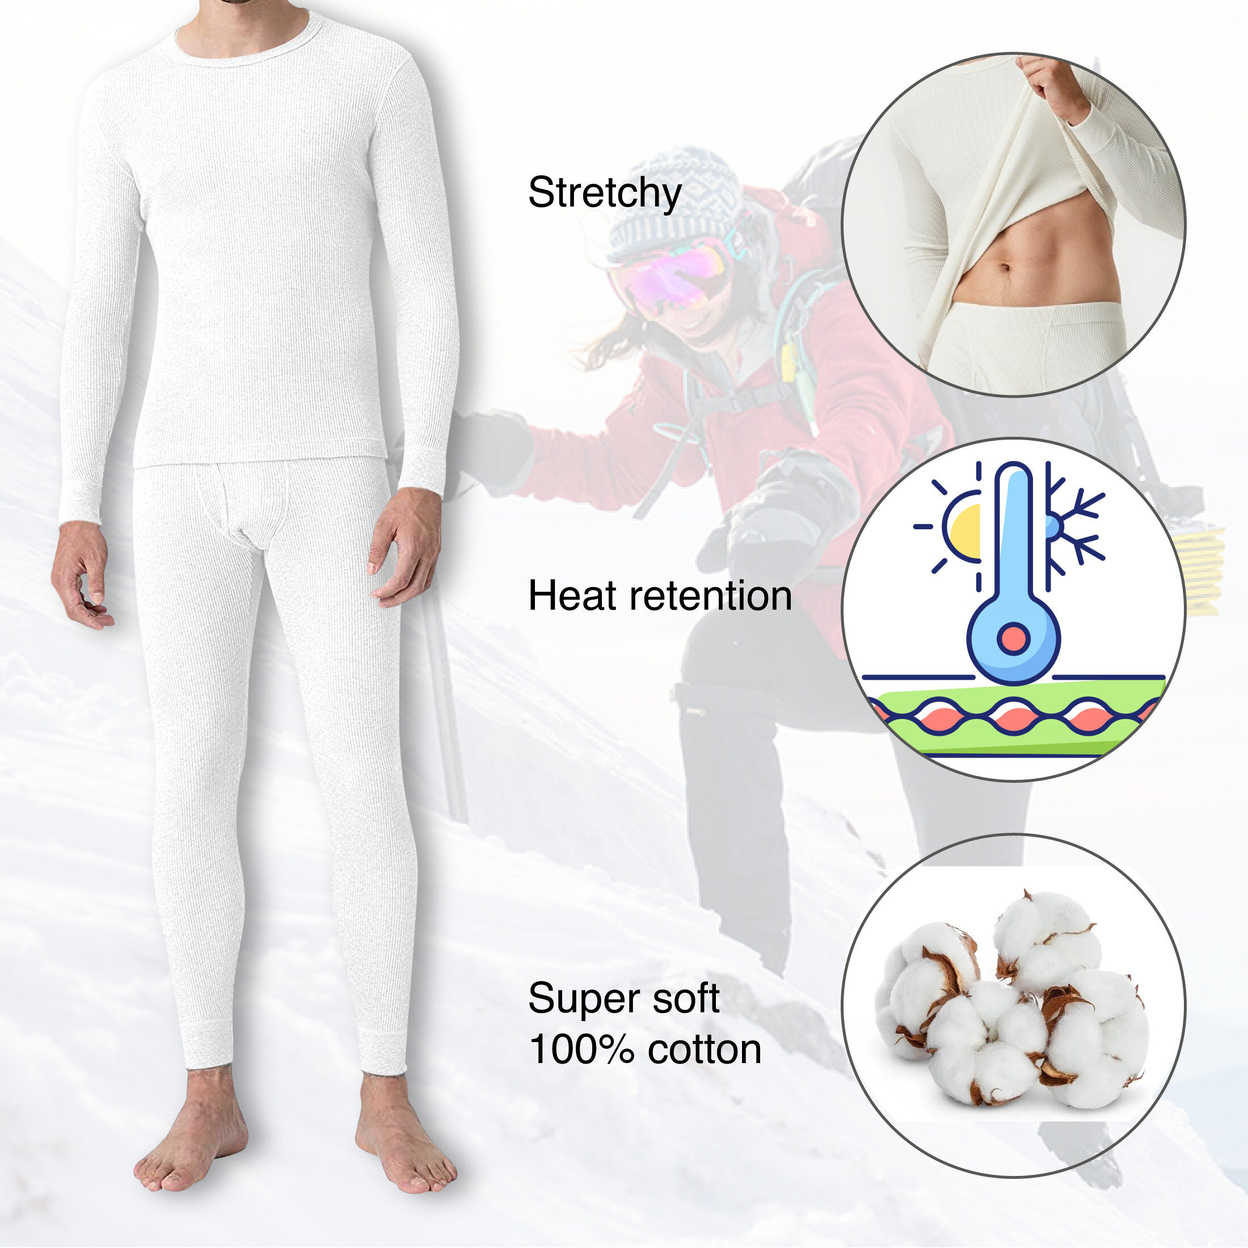 Multi-Set: Men's Super-Soft Cotton Waffle Knit Winter Thermal Underwear Set - 1-pack, Large